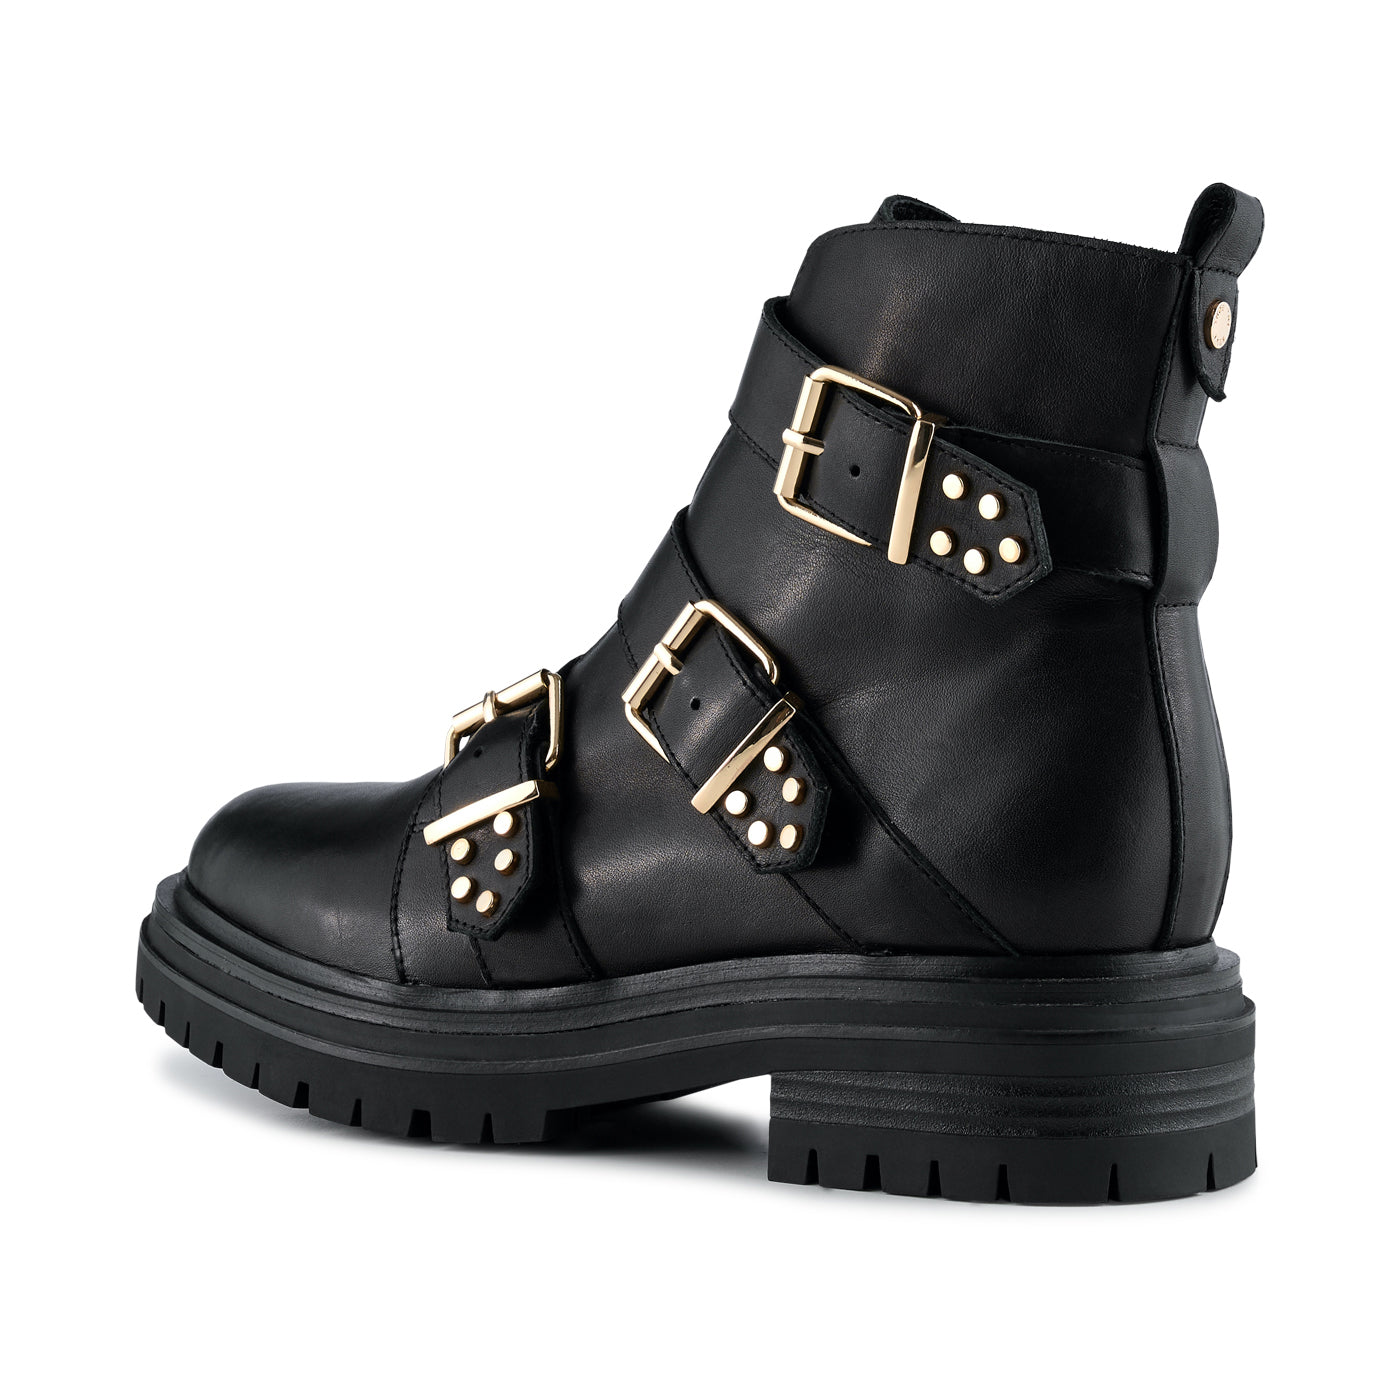 SHOE THE BEAR WOMENS Franka boot leather Boots 110 BLACK